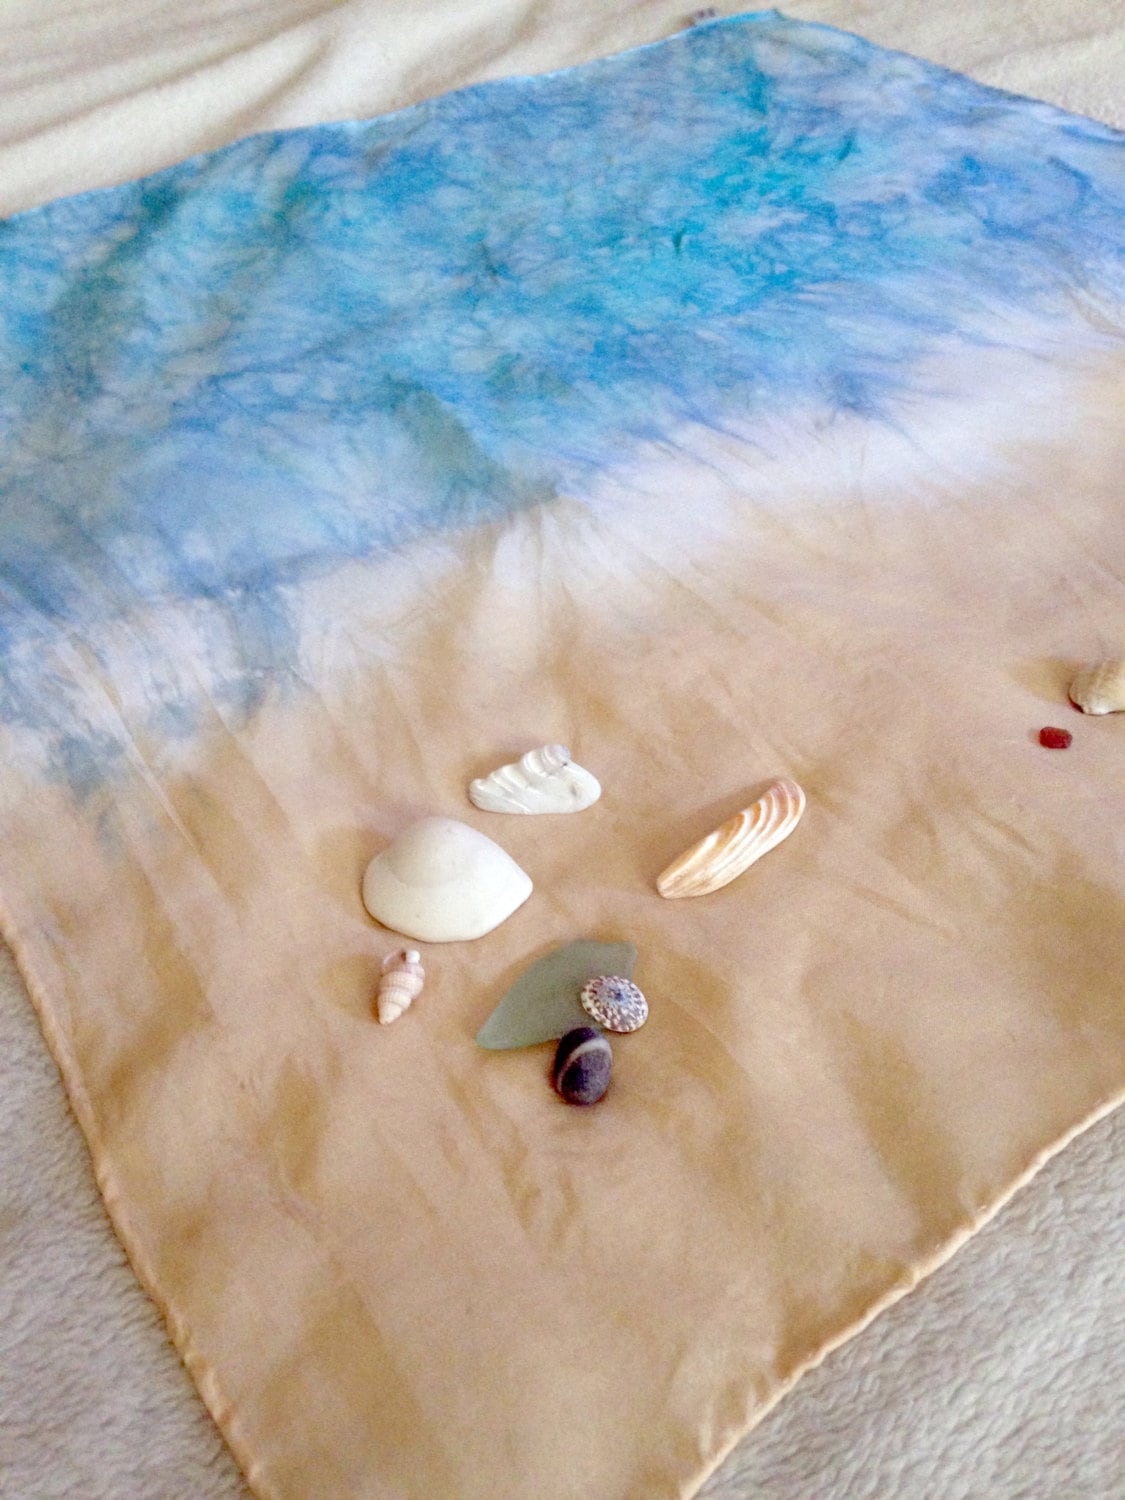 Seashell Playmat for Dogs – PAIKKA